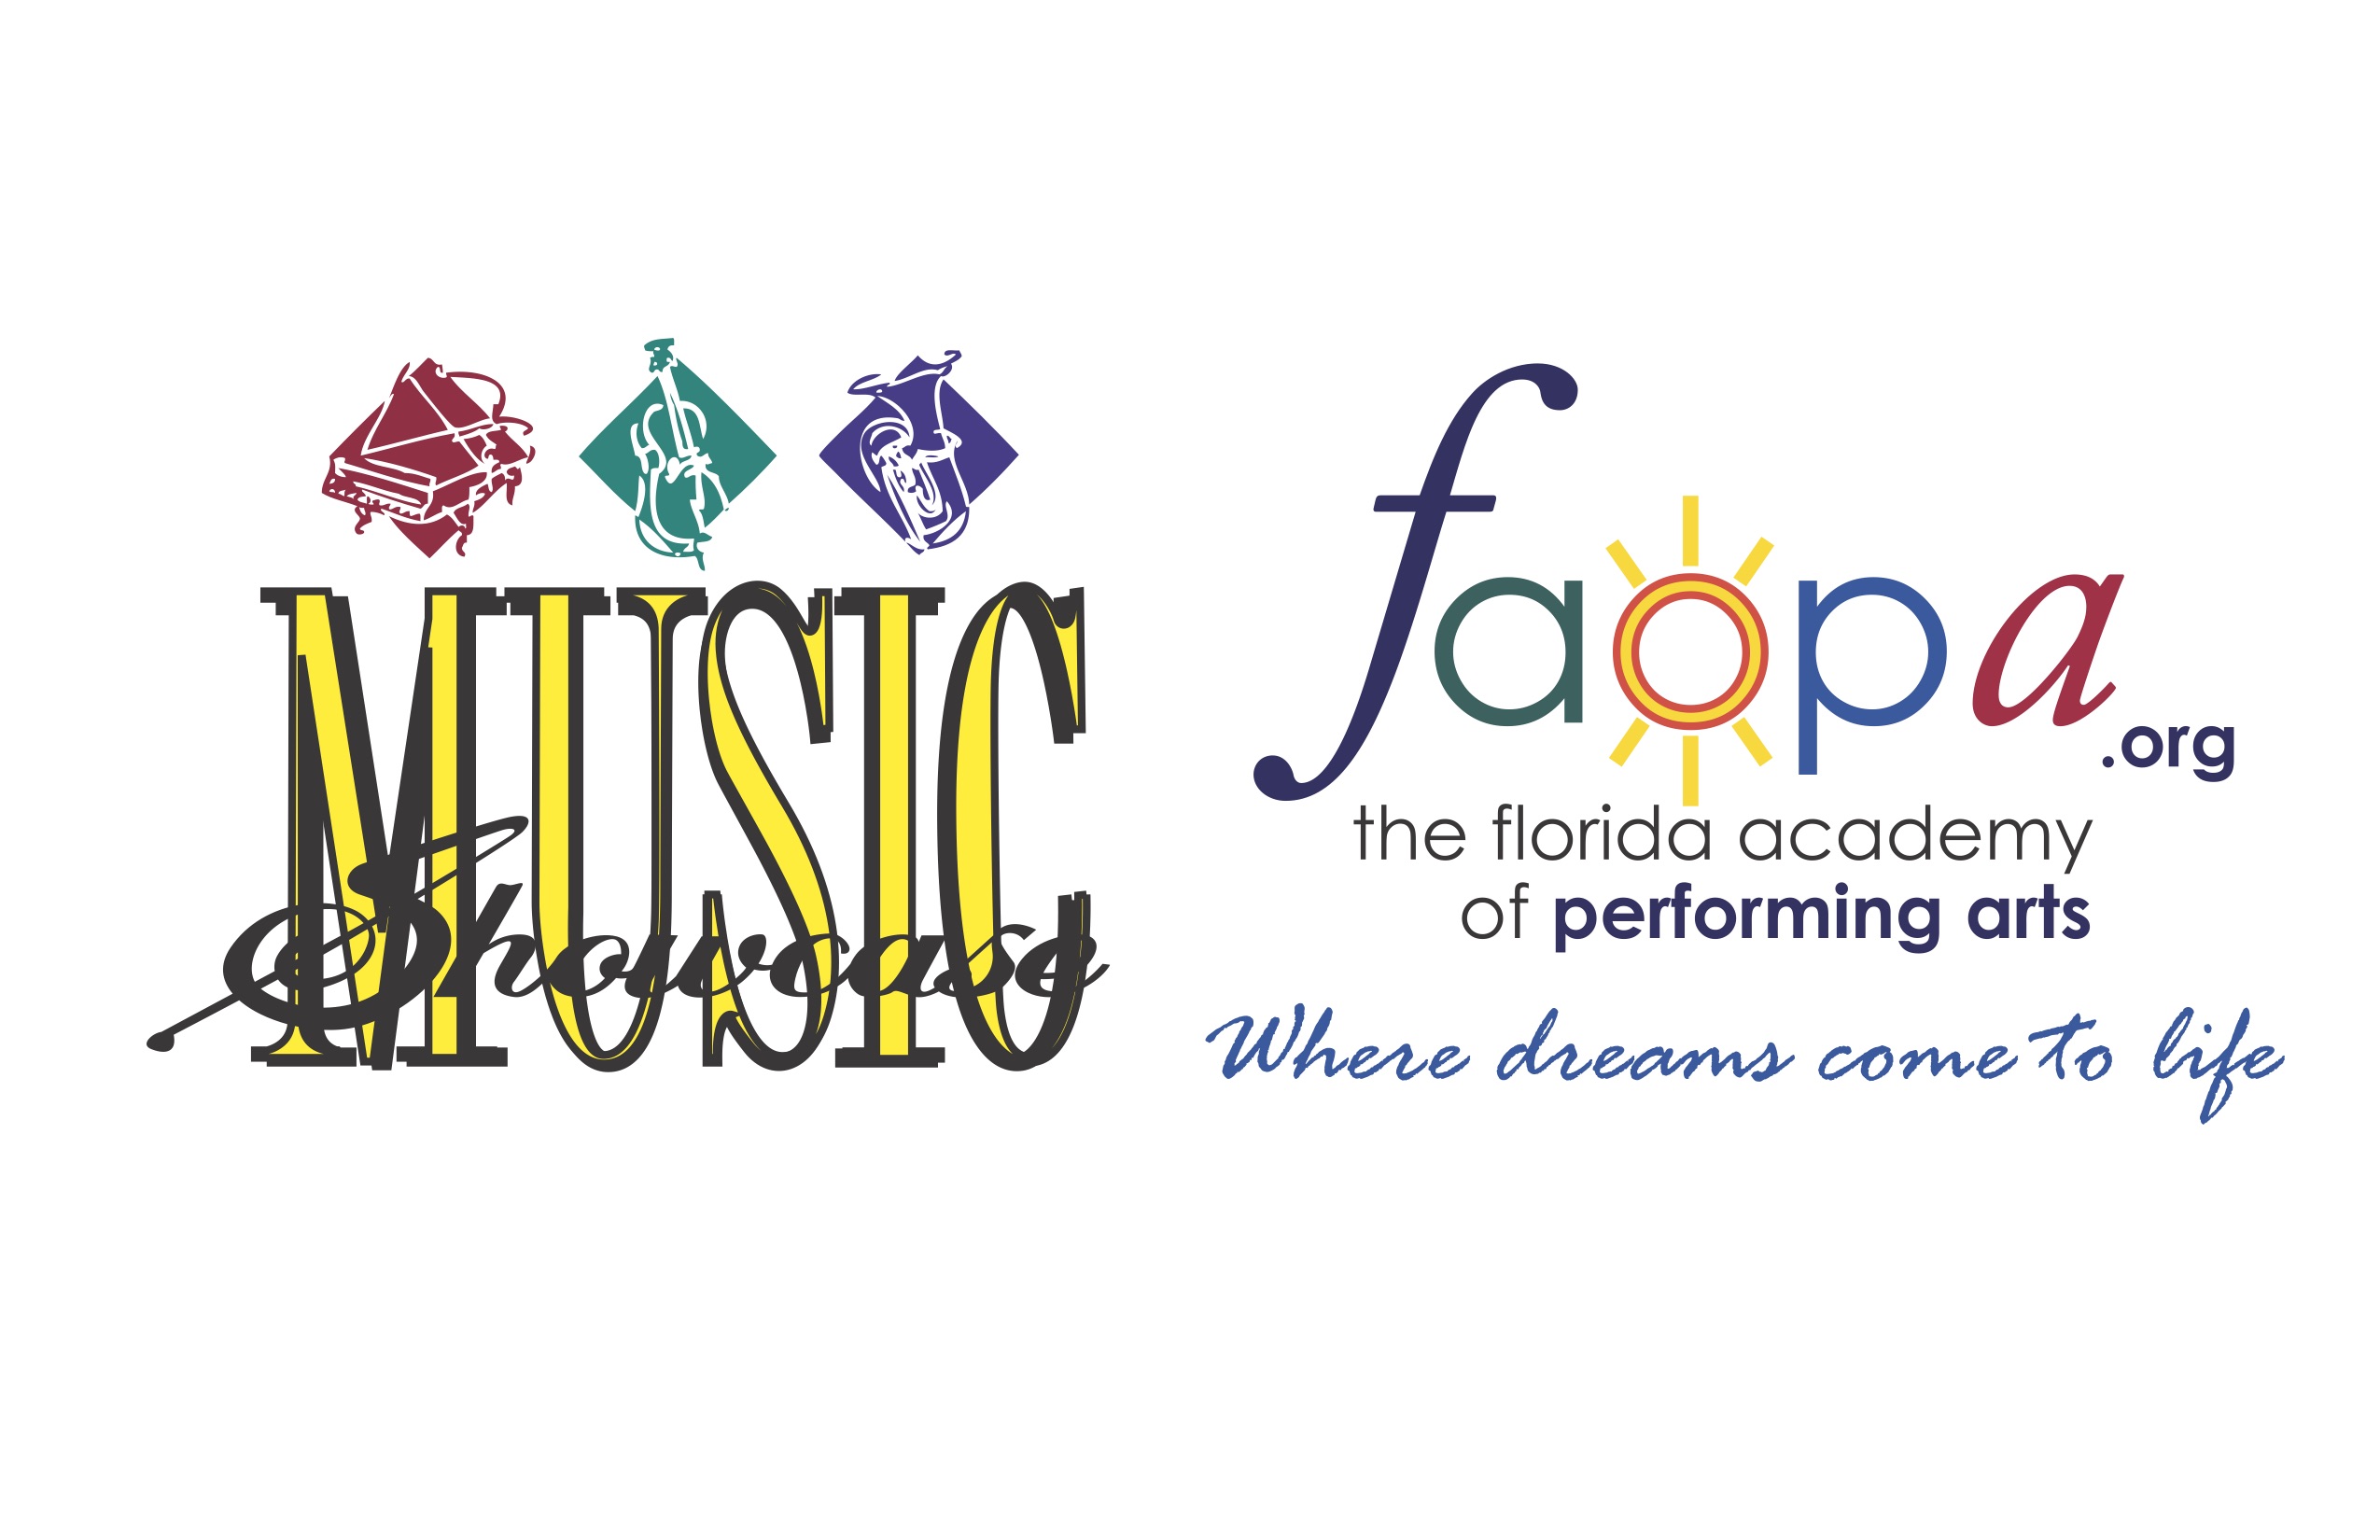 Presenting sponsor Florida Academy of Performing Arts 